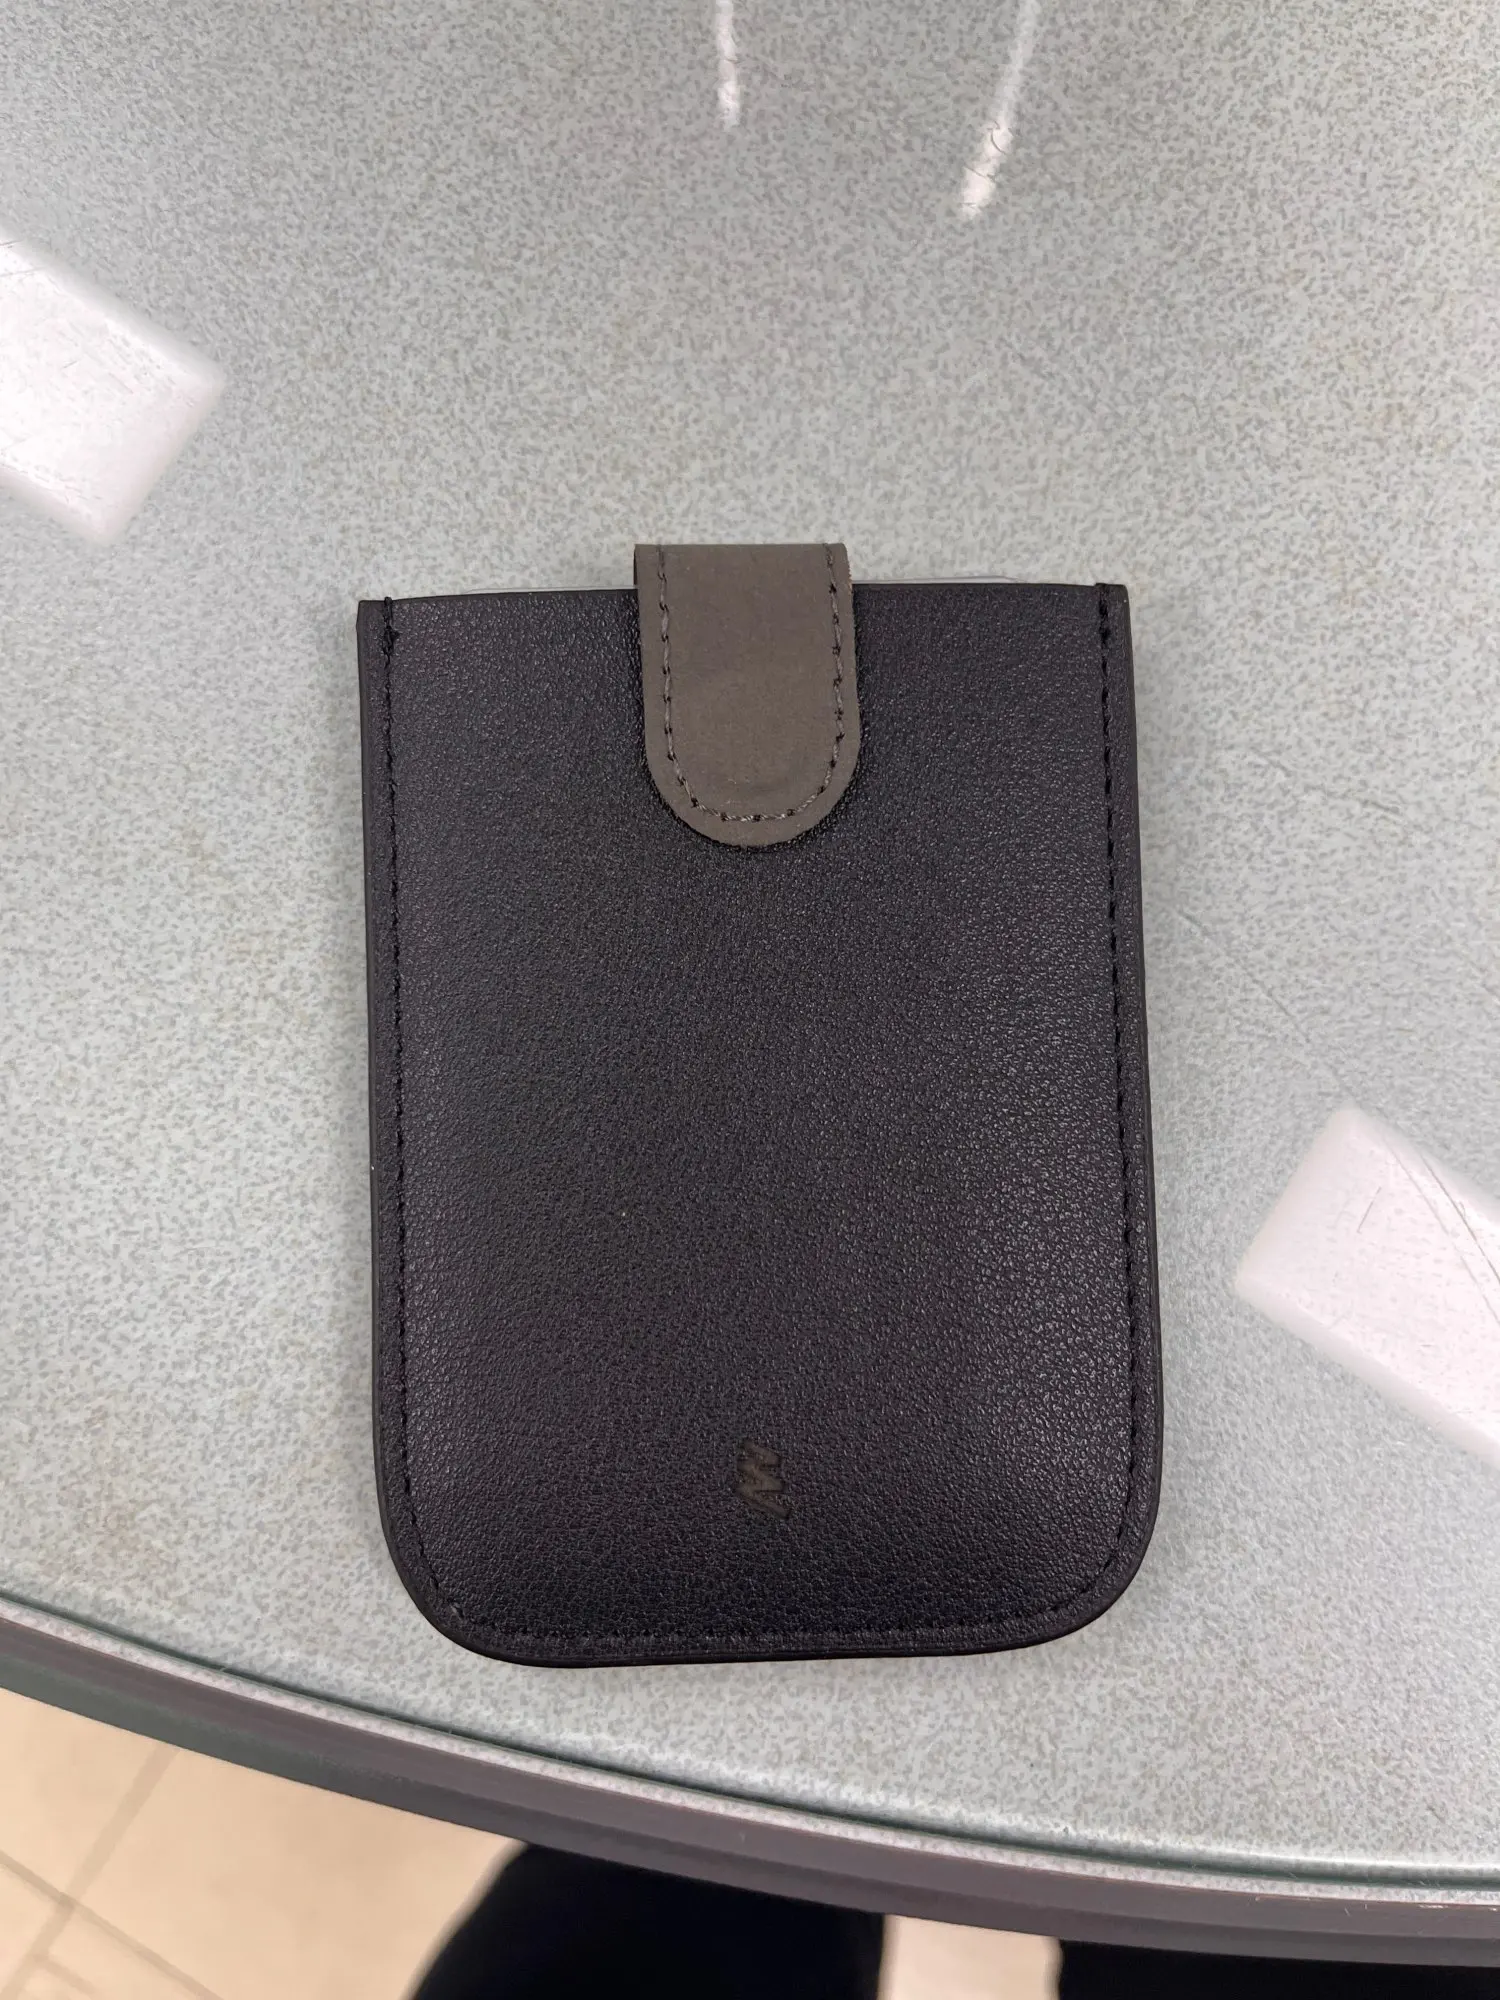 2021 DAX V3 Mini Slim Portable Card Holders Pulled Design Men Wallet Gradient Color 5 Cards Money Short Women Purse